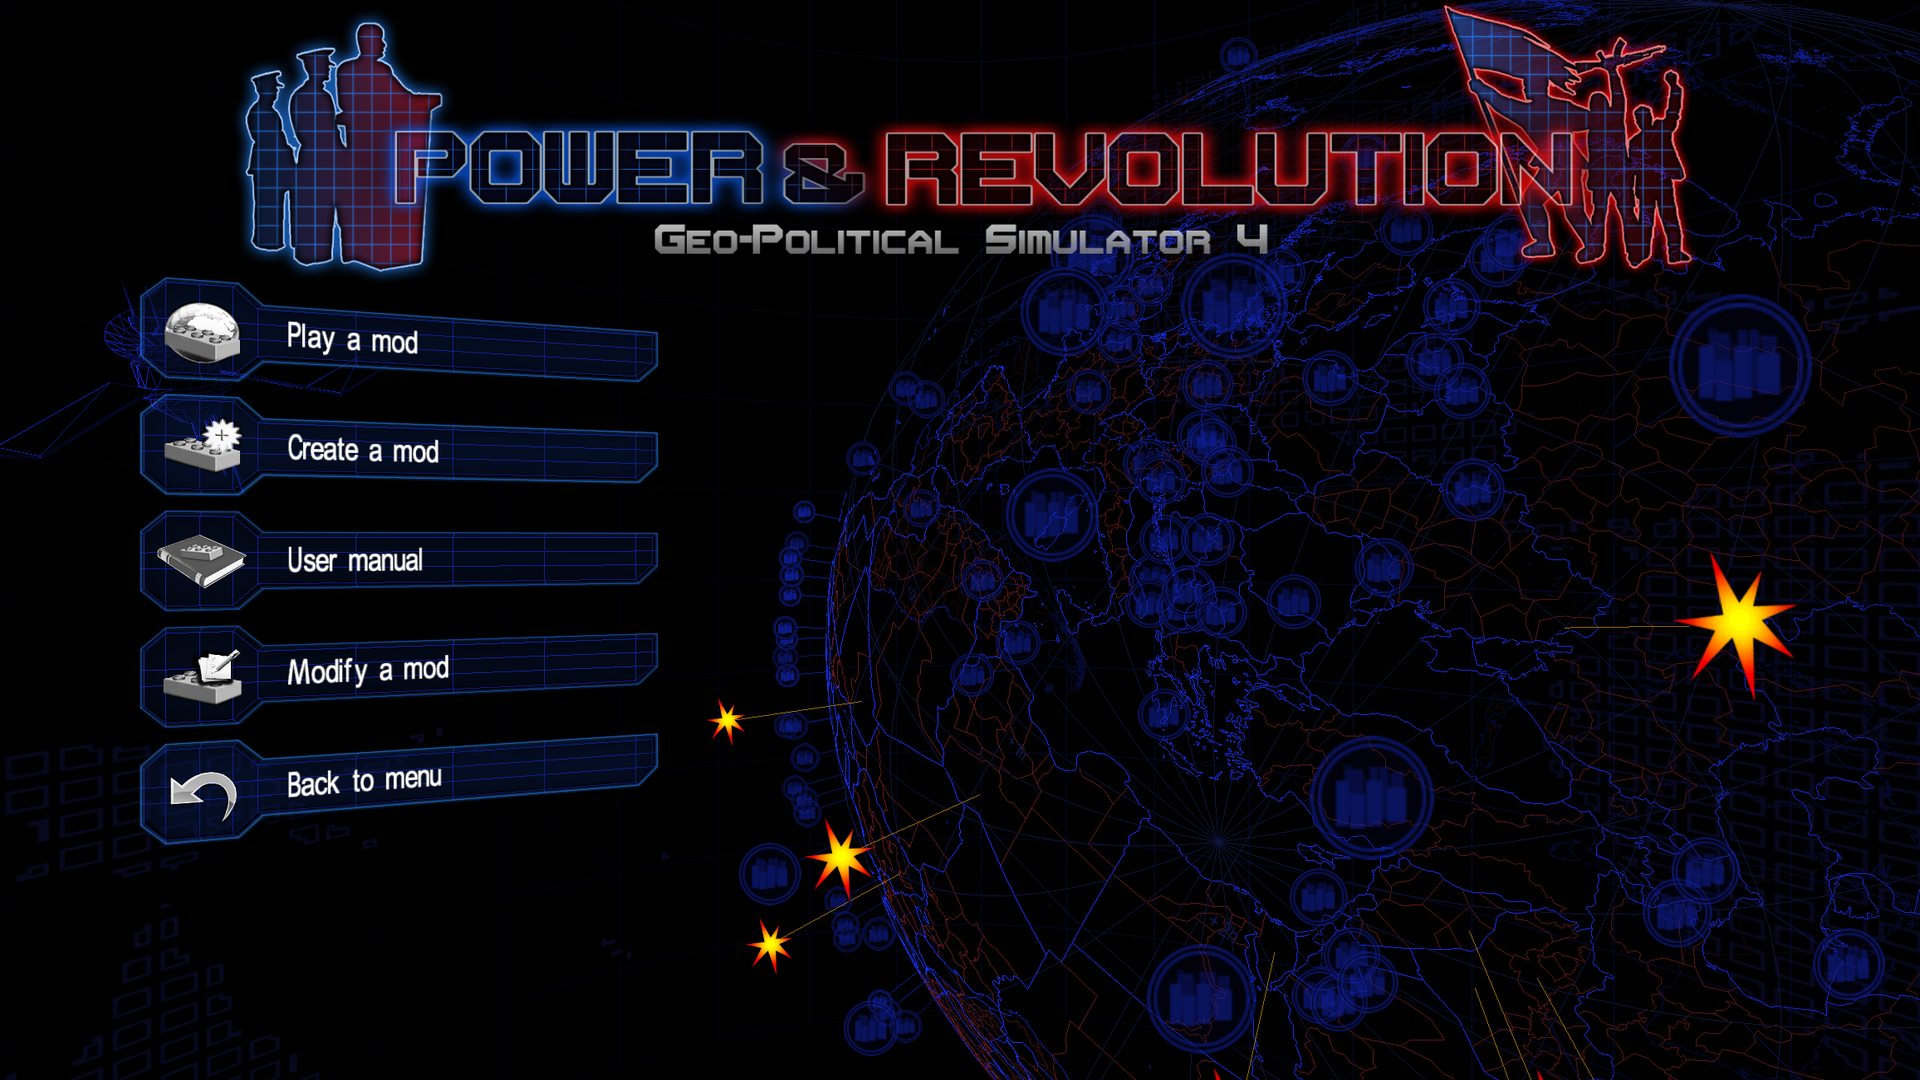 Power revolution 2023 edition. Power and Revolution: geopolitical Simulator 4. Power & Revolution 2019 Edition. Power and Revolution 2021. Geopolitical Simulator 4 исследования.